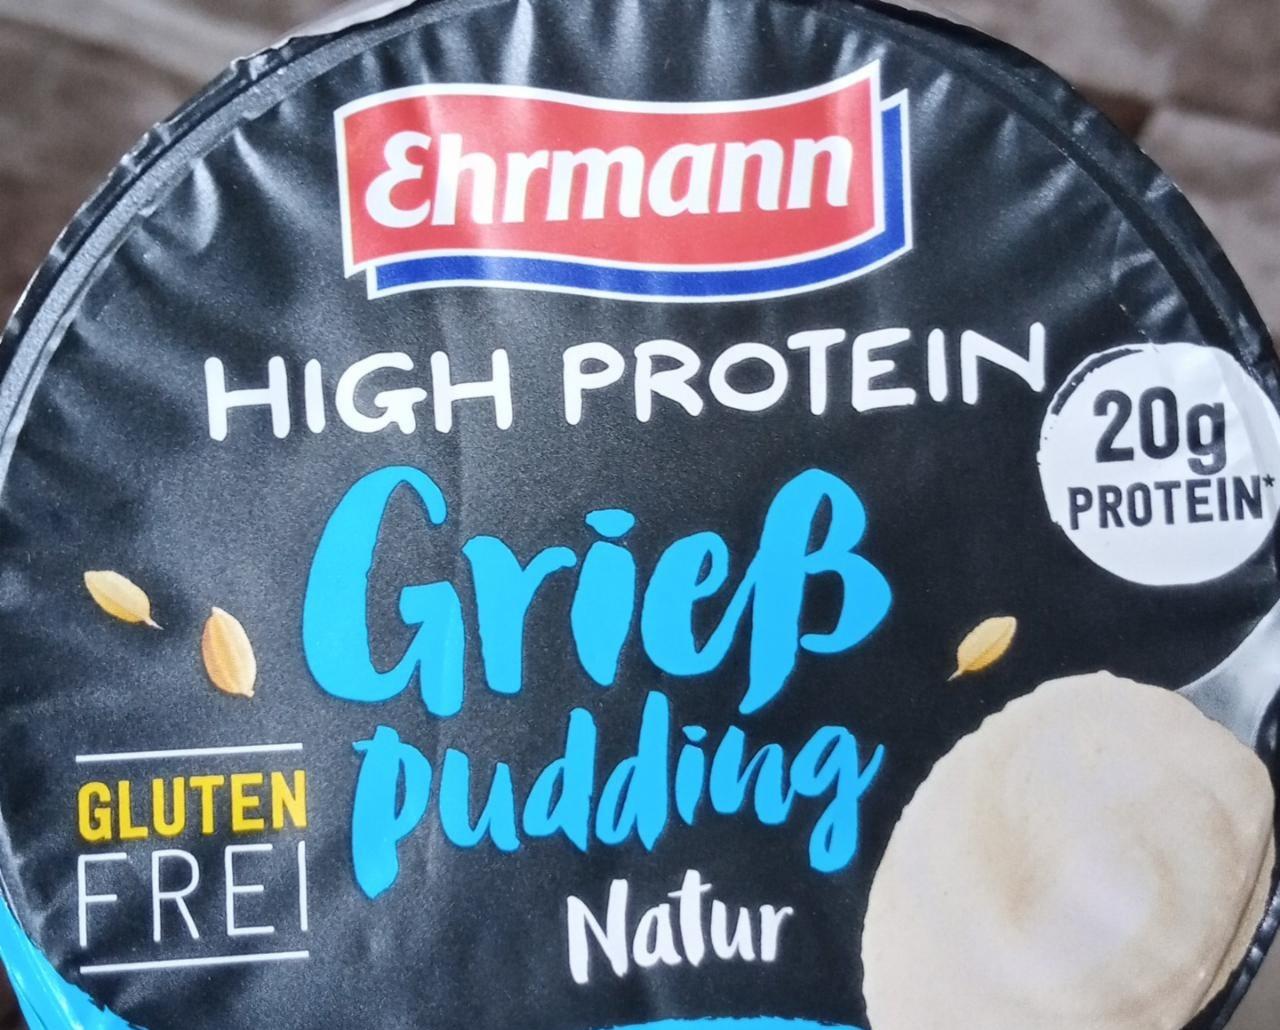 Фото - High protein grieß pudding natur Ehrmann